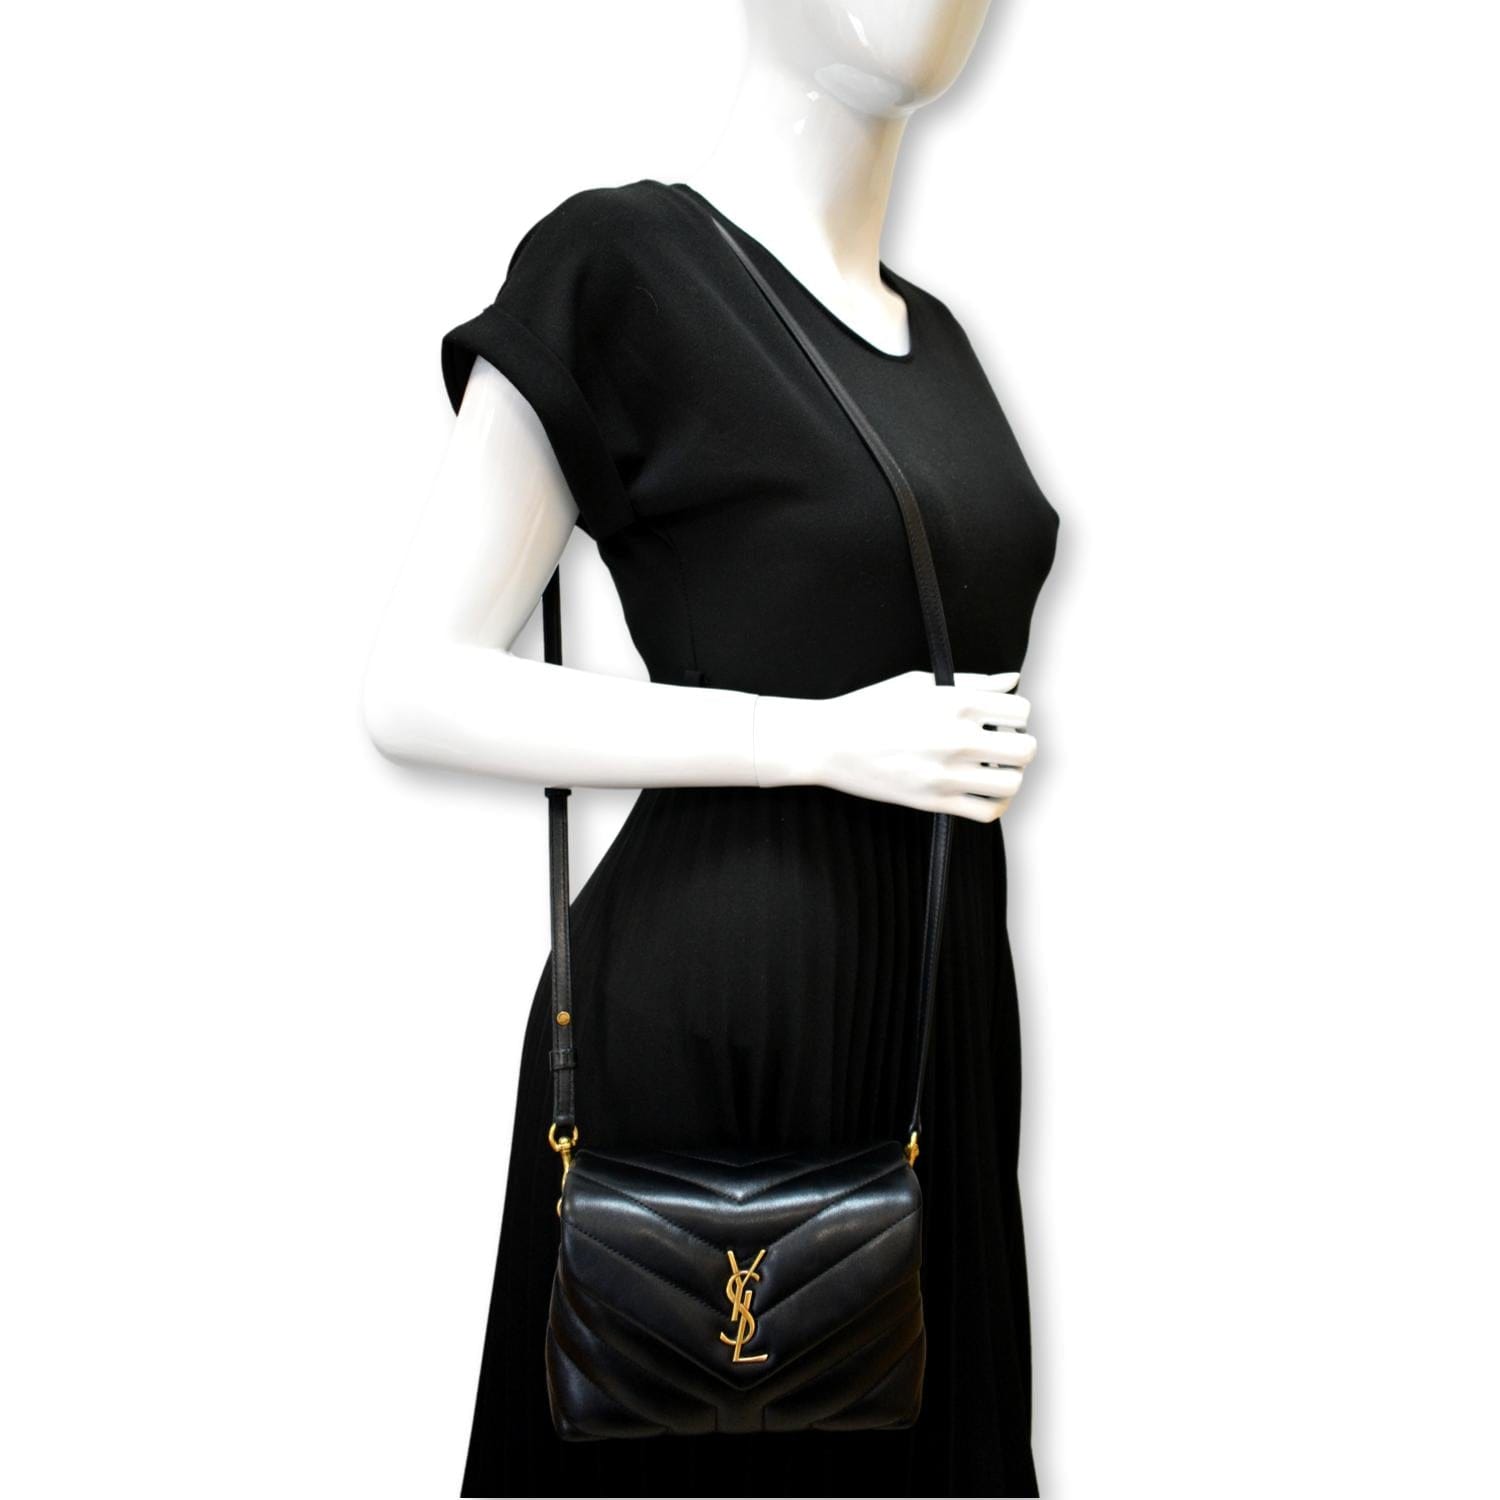 YVES SAINT LAURENT Small Loulou Matelasse Leather Shoulder Bag Black